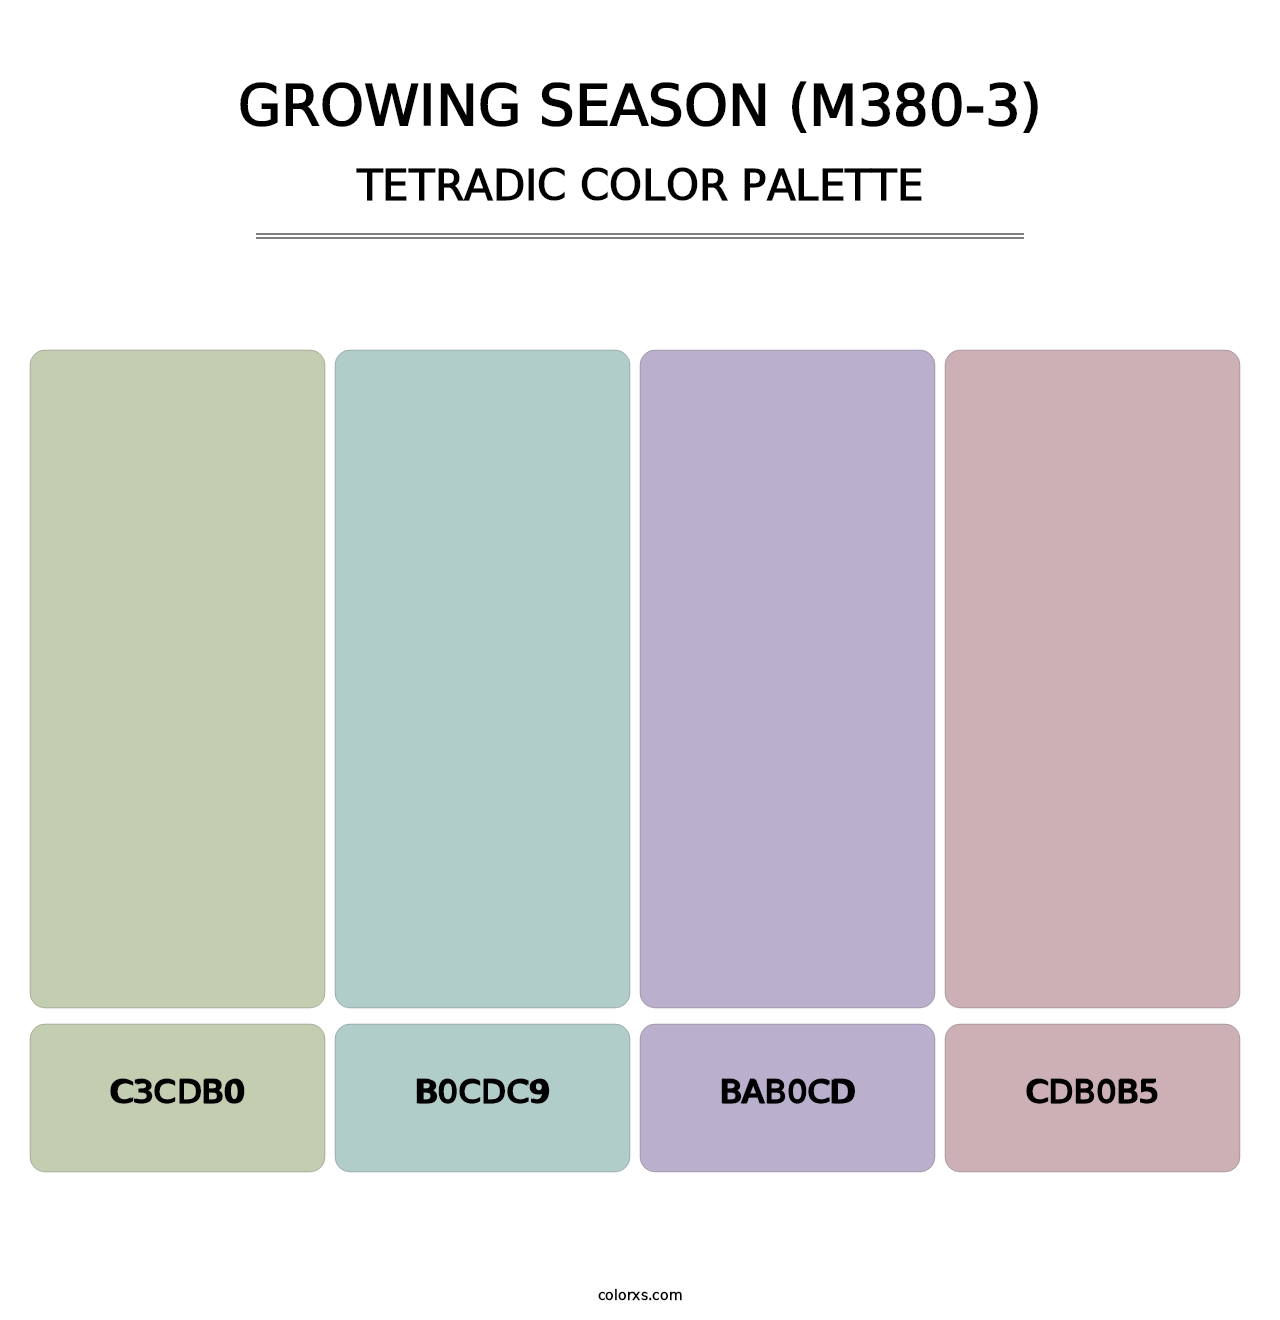 Growing Season (M380-3) - Tetradic Color Palette